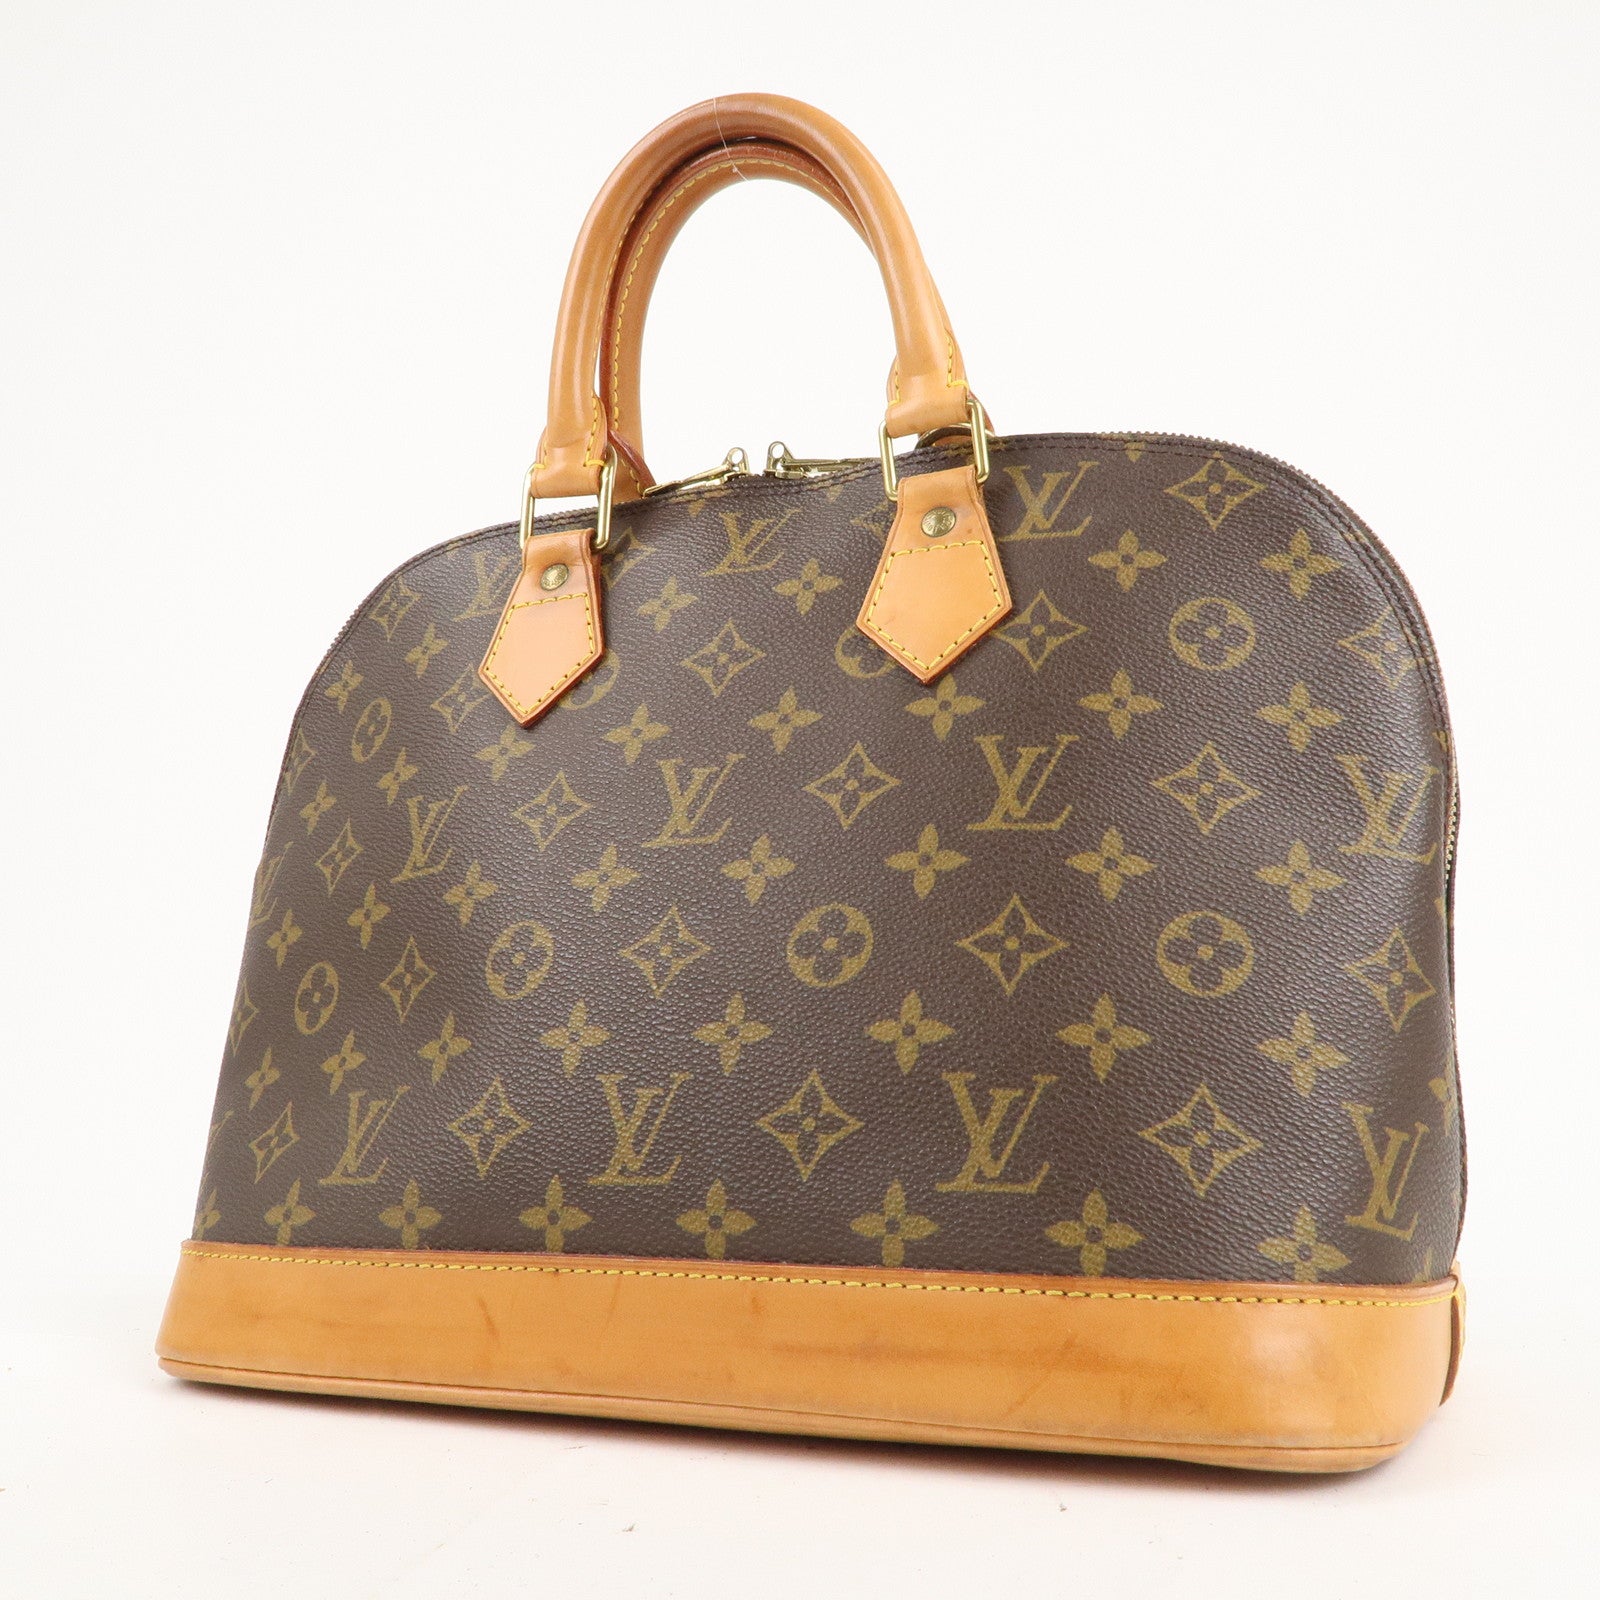 Buy Handbag Monogram Alma BB M53152 Louis Vuitton Brown Handbag LOUIS  VUITTON LV 【second hand】 from Japan - Buy authentic Plus exclusive items  from Japan